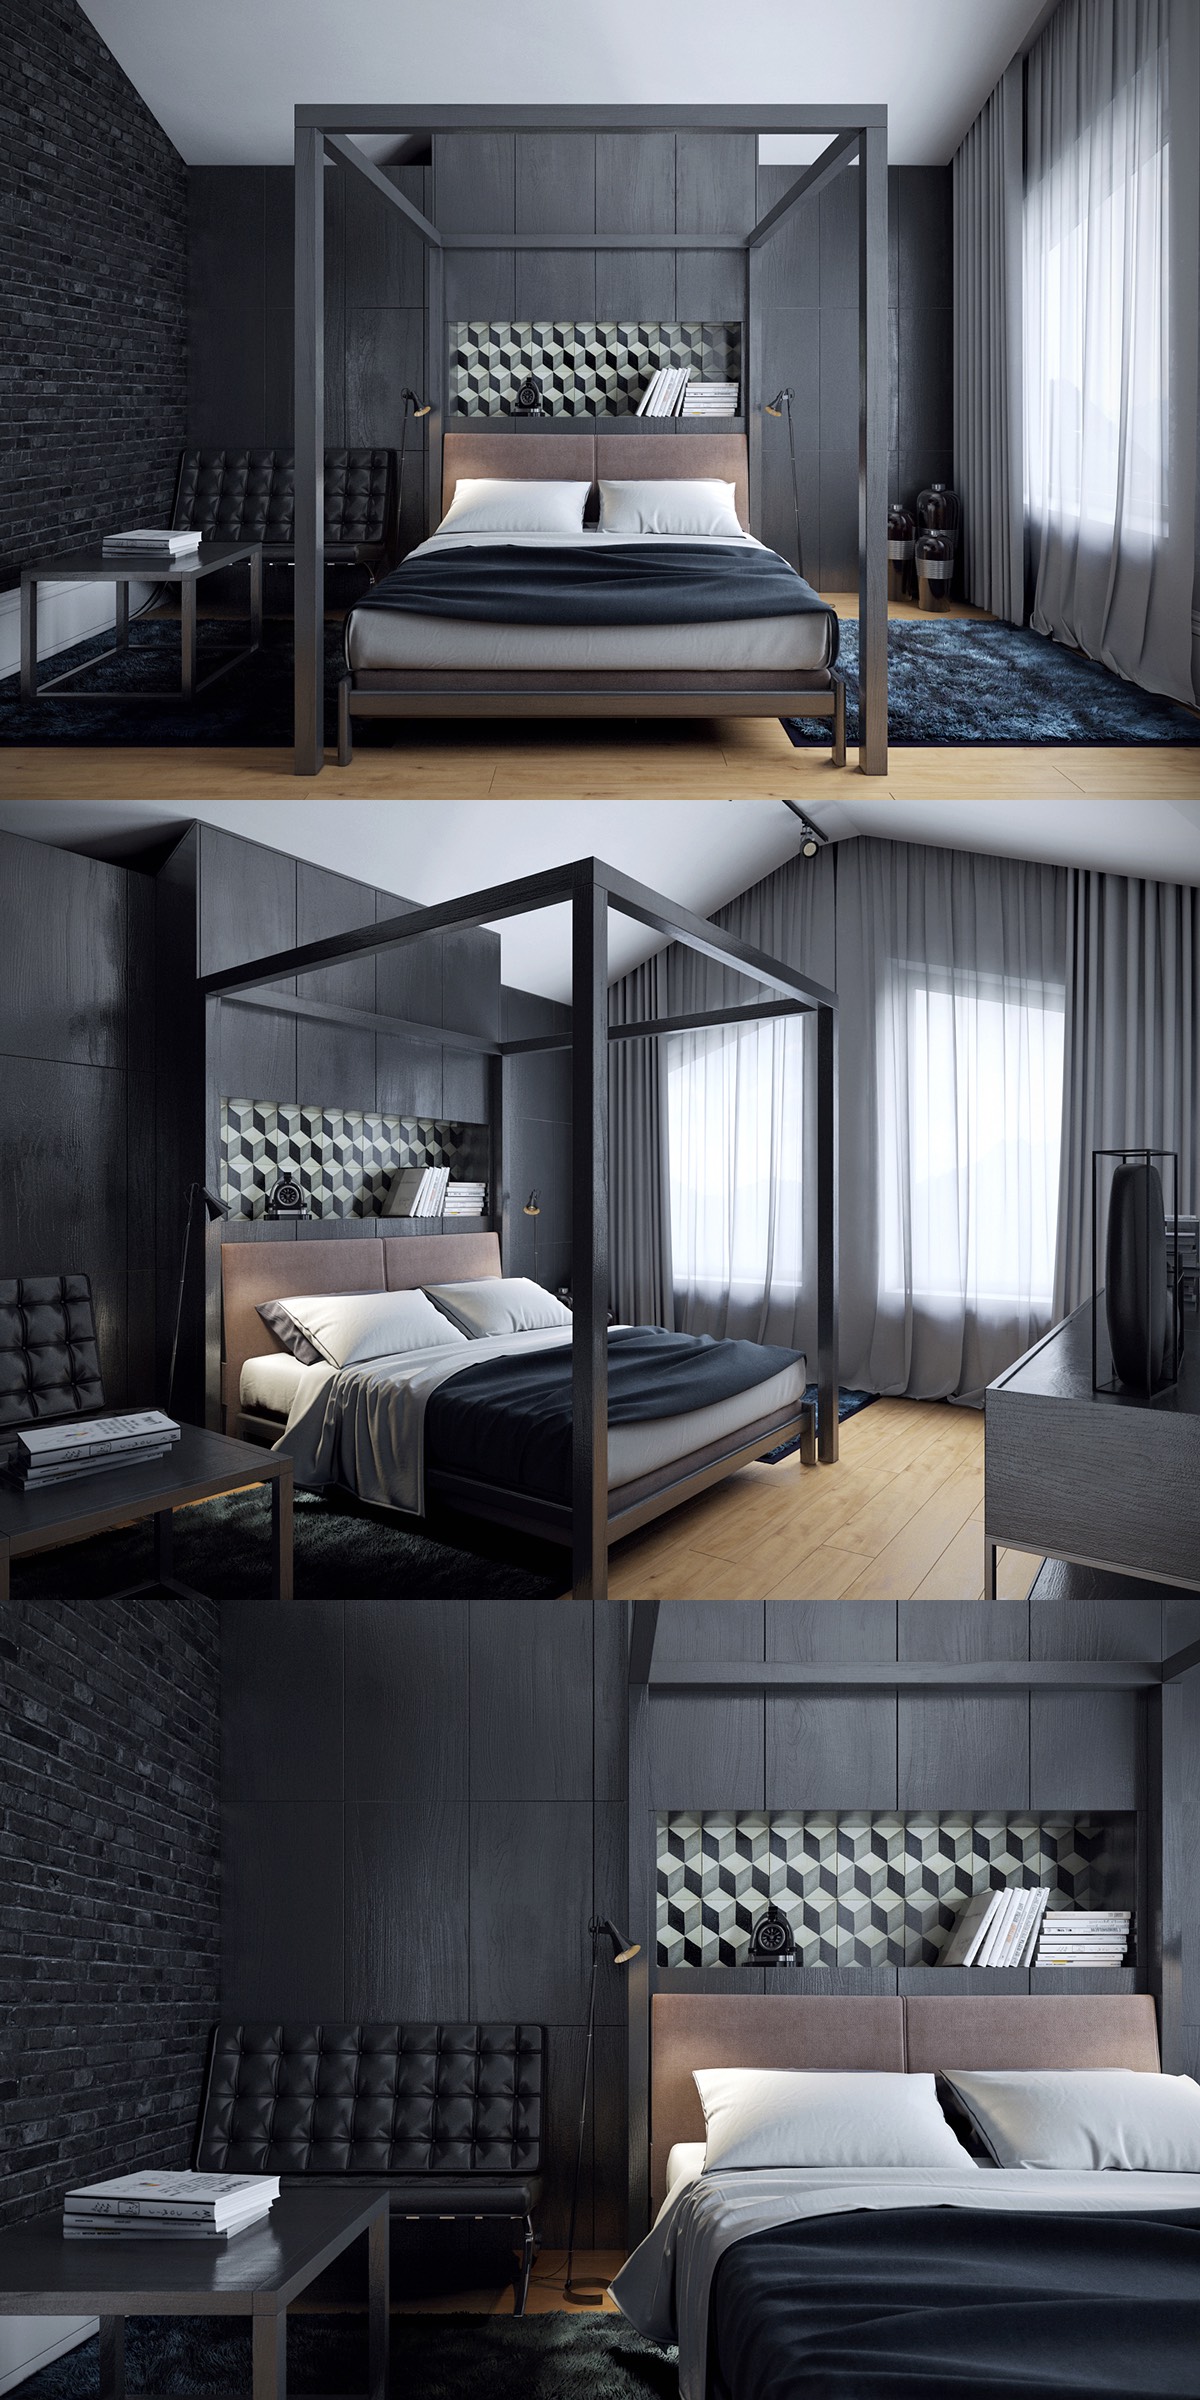 Dark bedroom concept "width =" 1200 "height =" 2400 "srcset =" https://mileray.com/wp-content/uploads/2020/05/1588510455_915_Dark-Bedroom-Design-Ideas-and-Inspiration-To-Get-The-Relax.jpg 1200w, https://mileray.com/ wp -content / uploads / 2016/07 / Sergey-Kondratev-150x300.jpg 150w, https://mileray.com/wp-content/uploads/2016/07/Sergey-Kondratev-768x1536.jpg 768w, https: // myfashionos .com / wp-content / uploads / 2016/07 / Sergey-Kondratev-512x1024.jpg 512w, https://mileray.com/wp-content/uploads/2016/07/Sergey-Kondratev-696x1392.jpg 696w, https : //mileray.com/wp-content/uploads/2016/07/Sergey-Kondratev-1068x2136.jpg 1068w, https://mileray.com/wp-content/uploads/2016/07/Sergey-Kondratev-210x420. jpg 210w "sizes =" (maximum width: 1200px) 100vw, 1200px